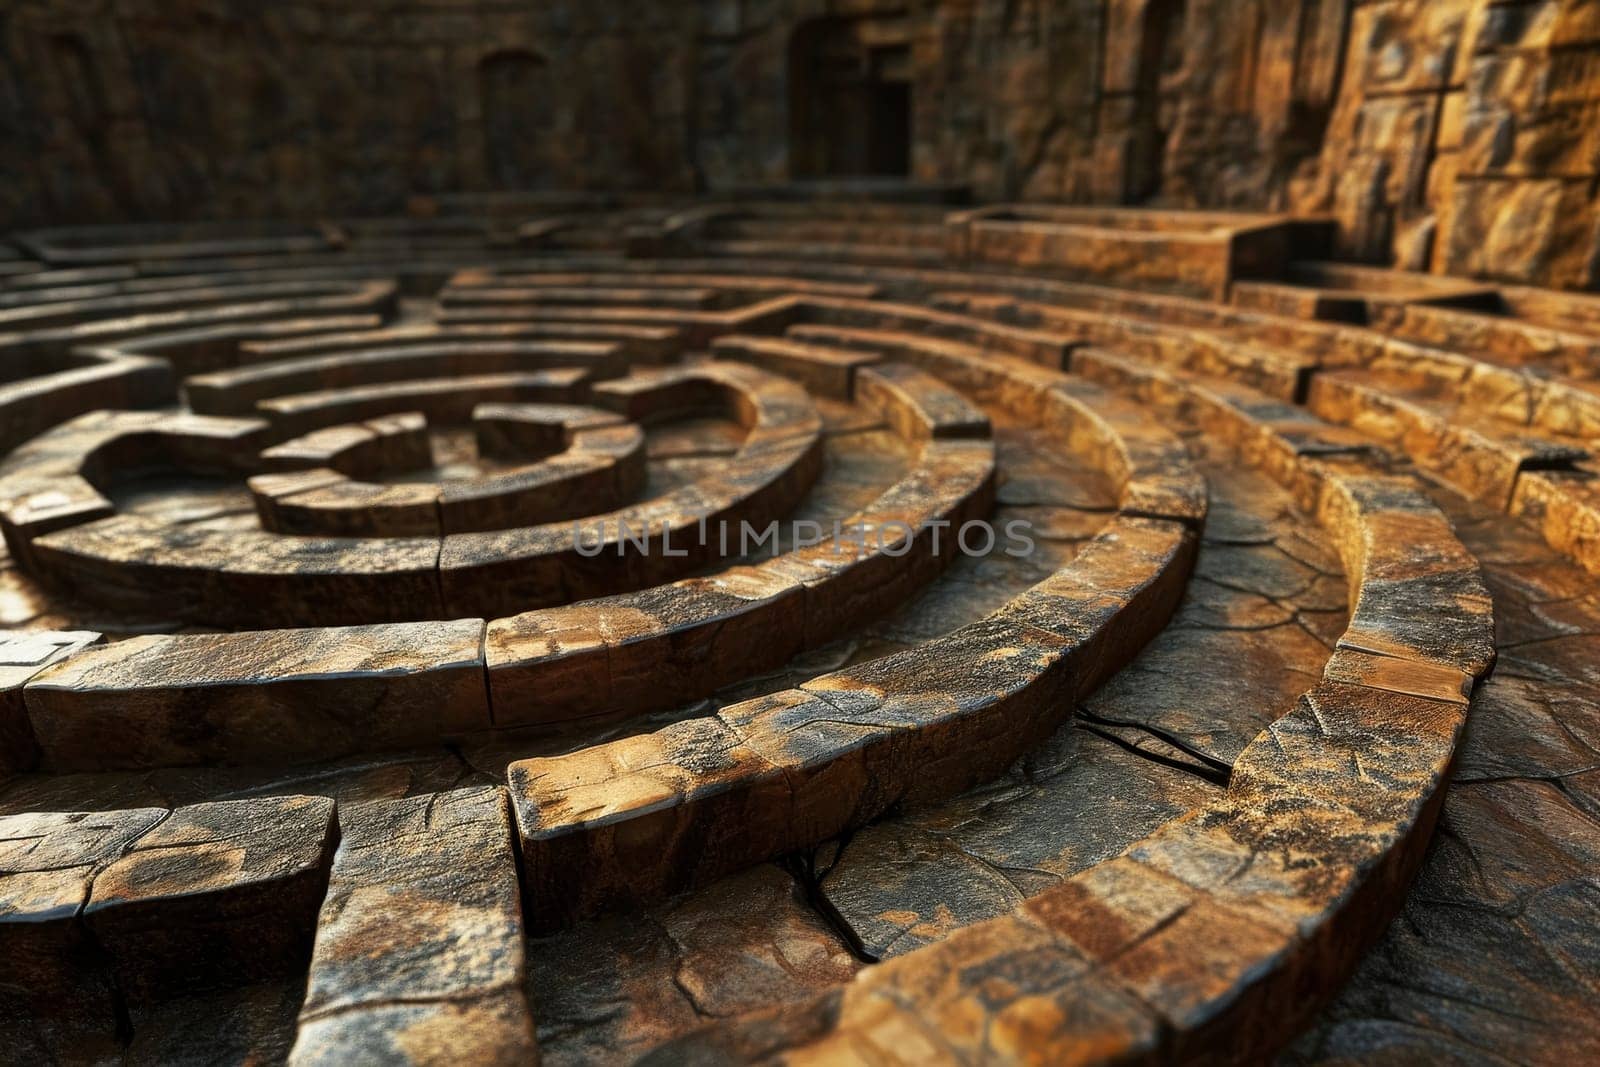 A large intricate stone labyrinth